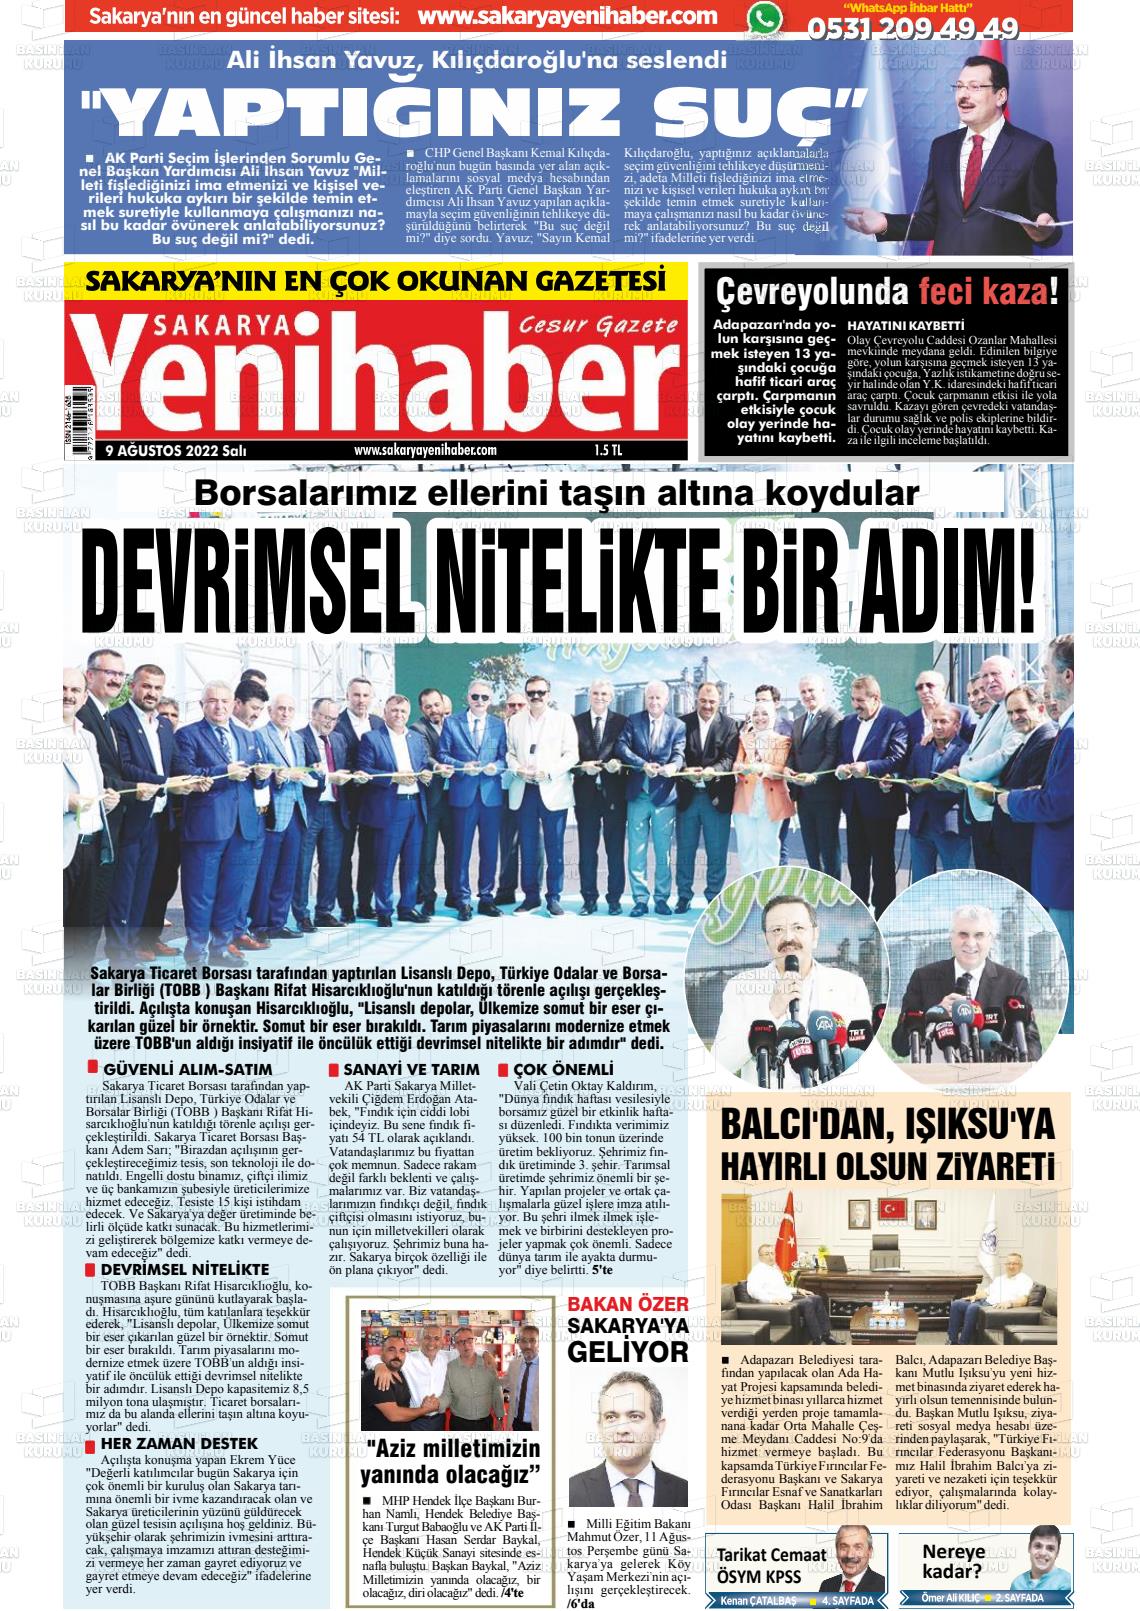 09 Ağustos 2022 Sakarya Yeni Haber Gazete Manşeti